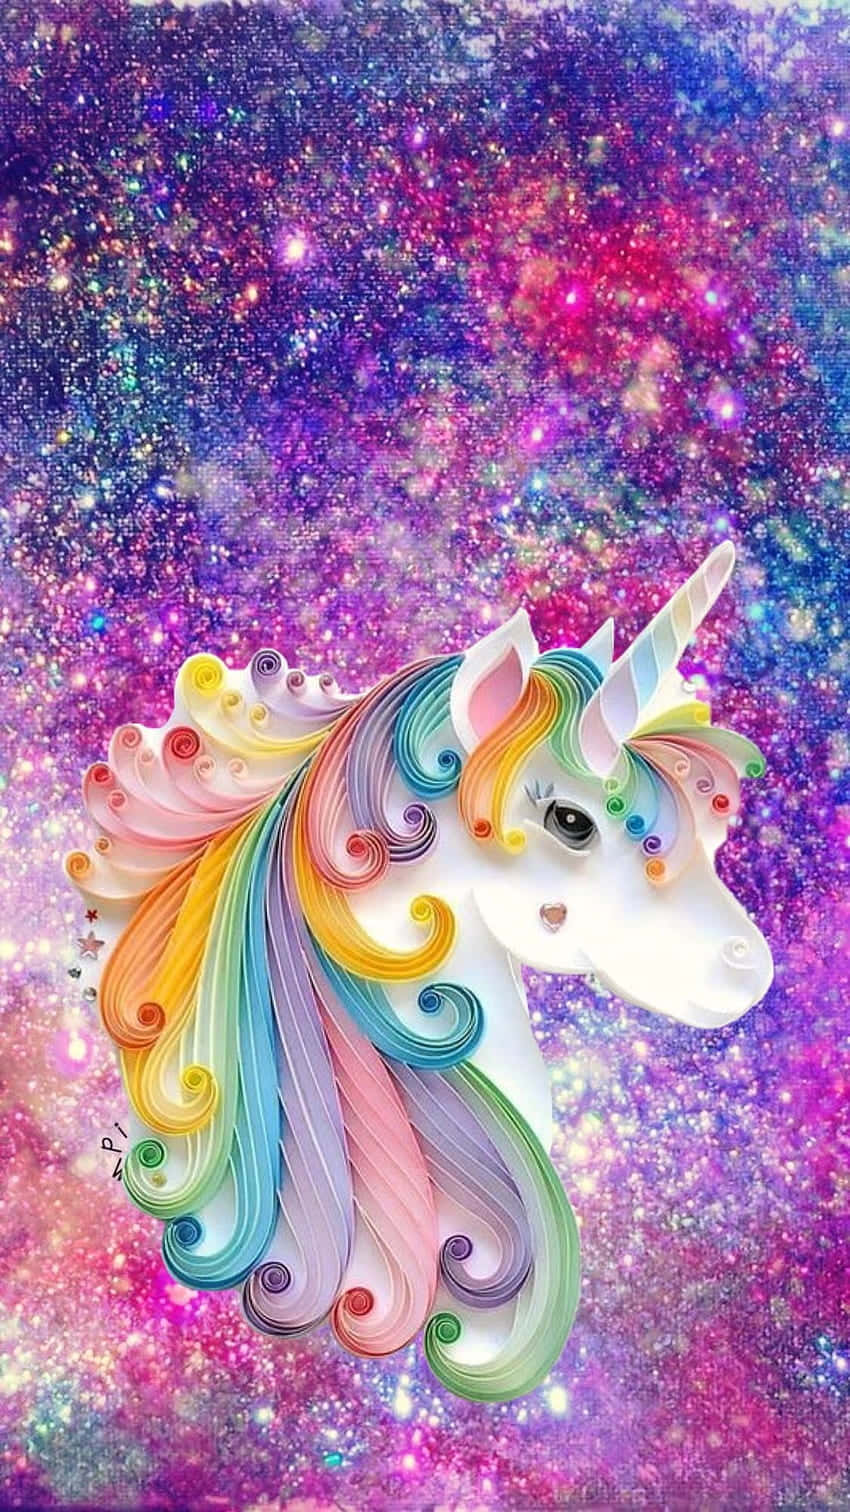 Colorful Unicorn Galaxy Background Wallpaper